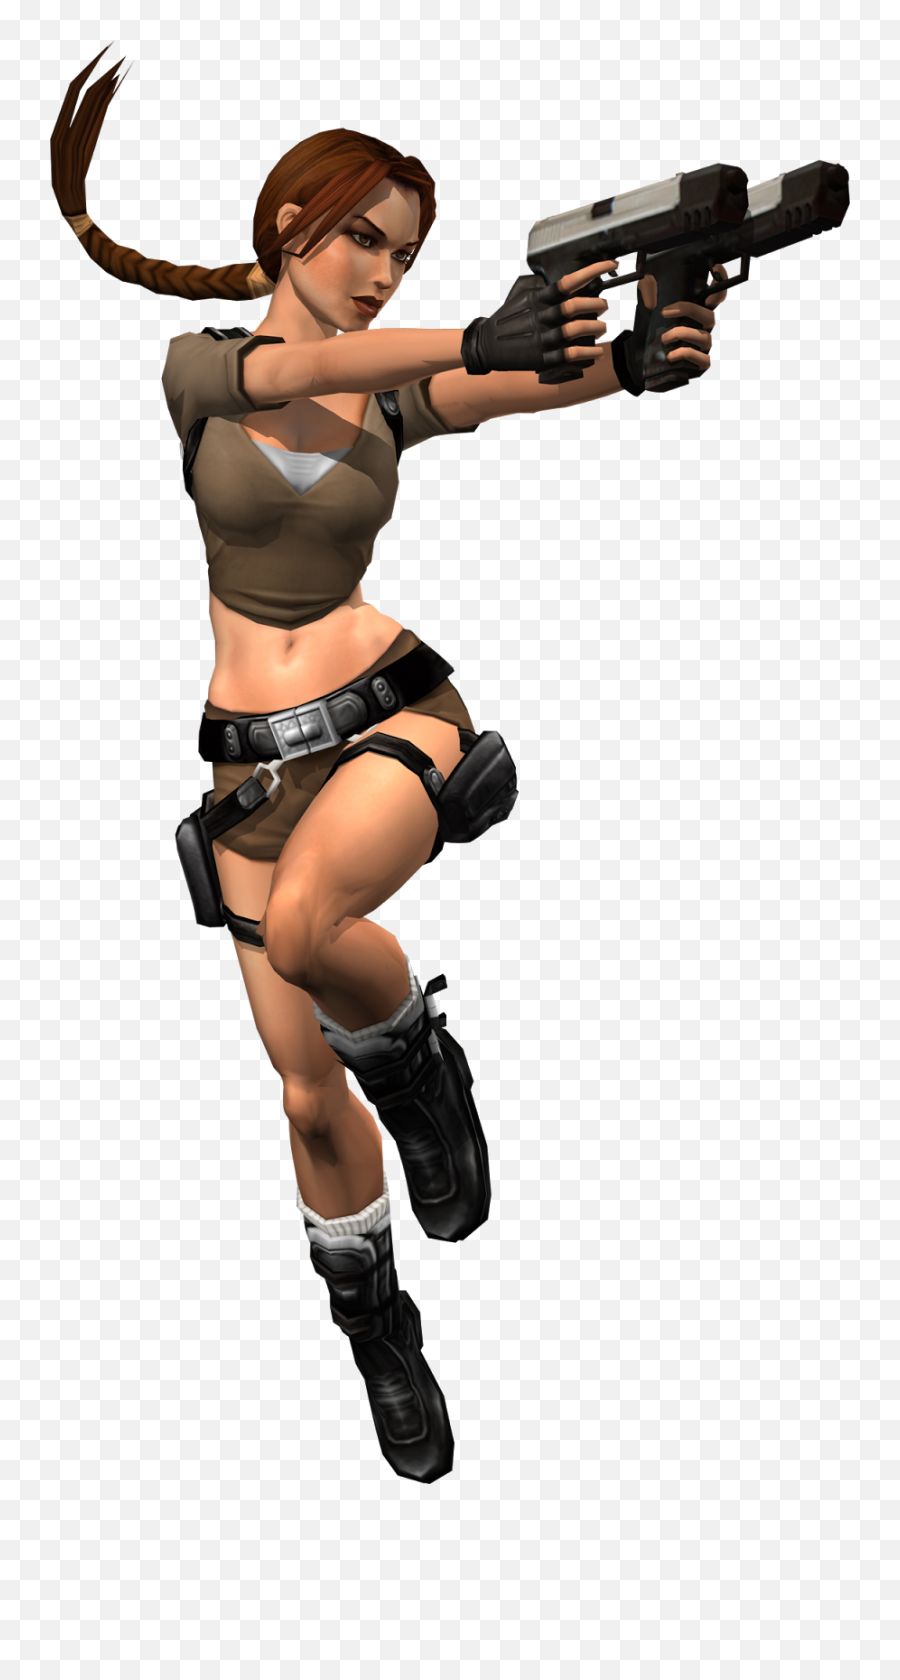 Download Free Png Lara Croft - Tomb Raider Legend Lara Croft,Lara Croft Transparent